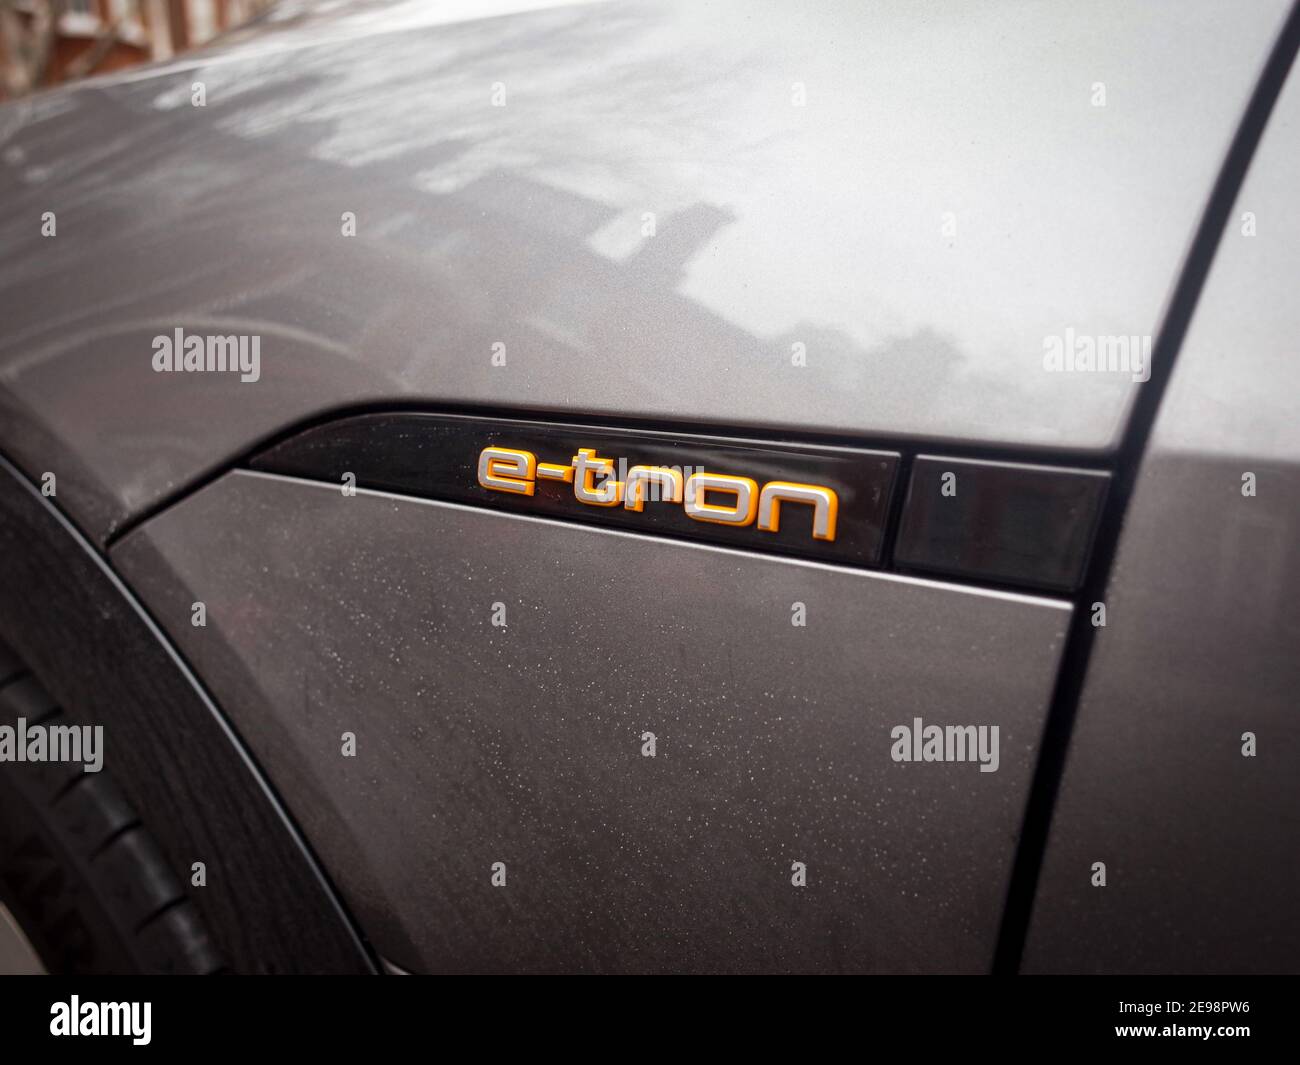 London- Audi E-Tron logo on side of vehicle. An electric car Stock Photo